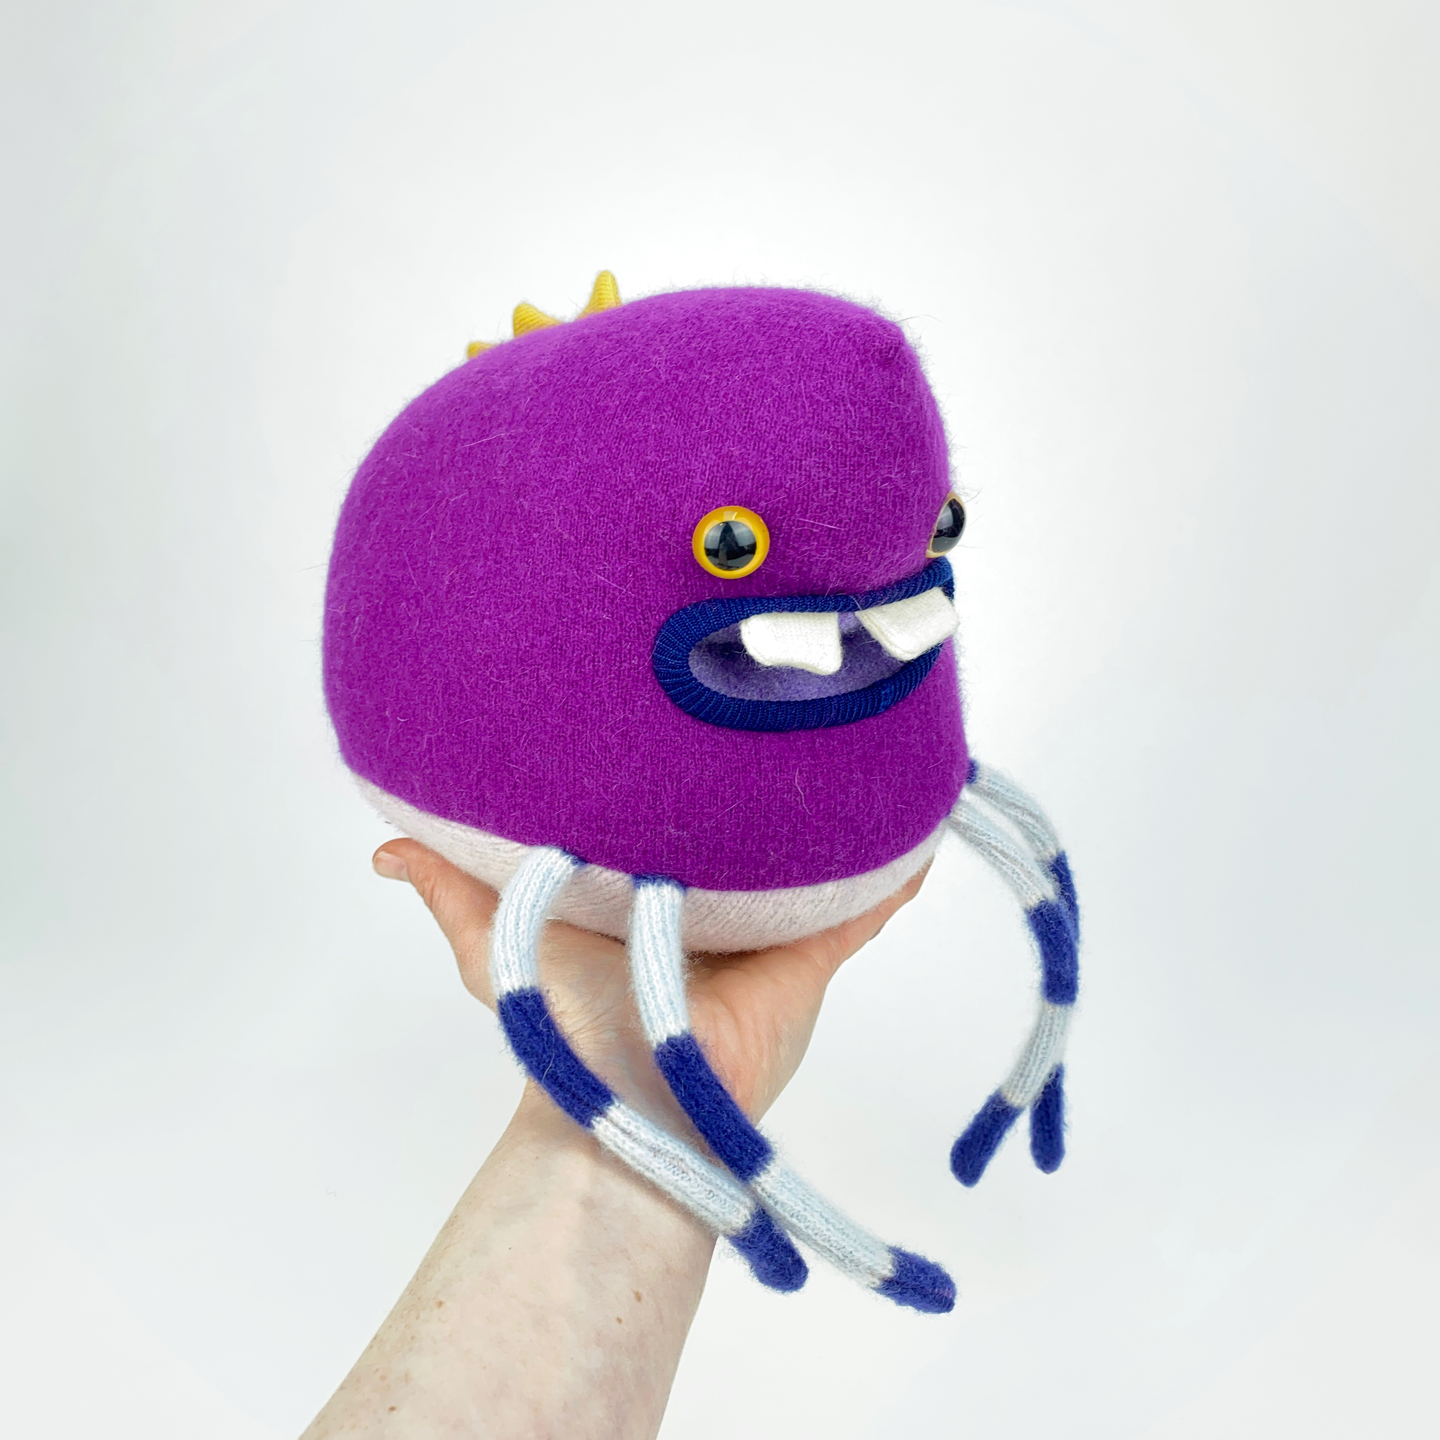 Percy the purple dinosaur style plush friendly my friend monster™